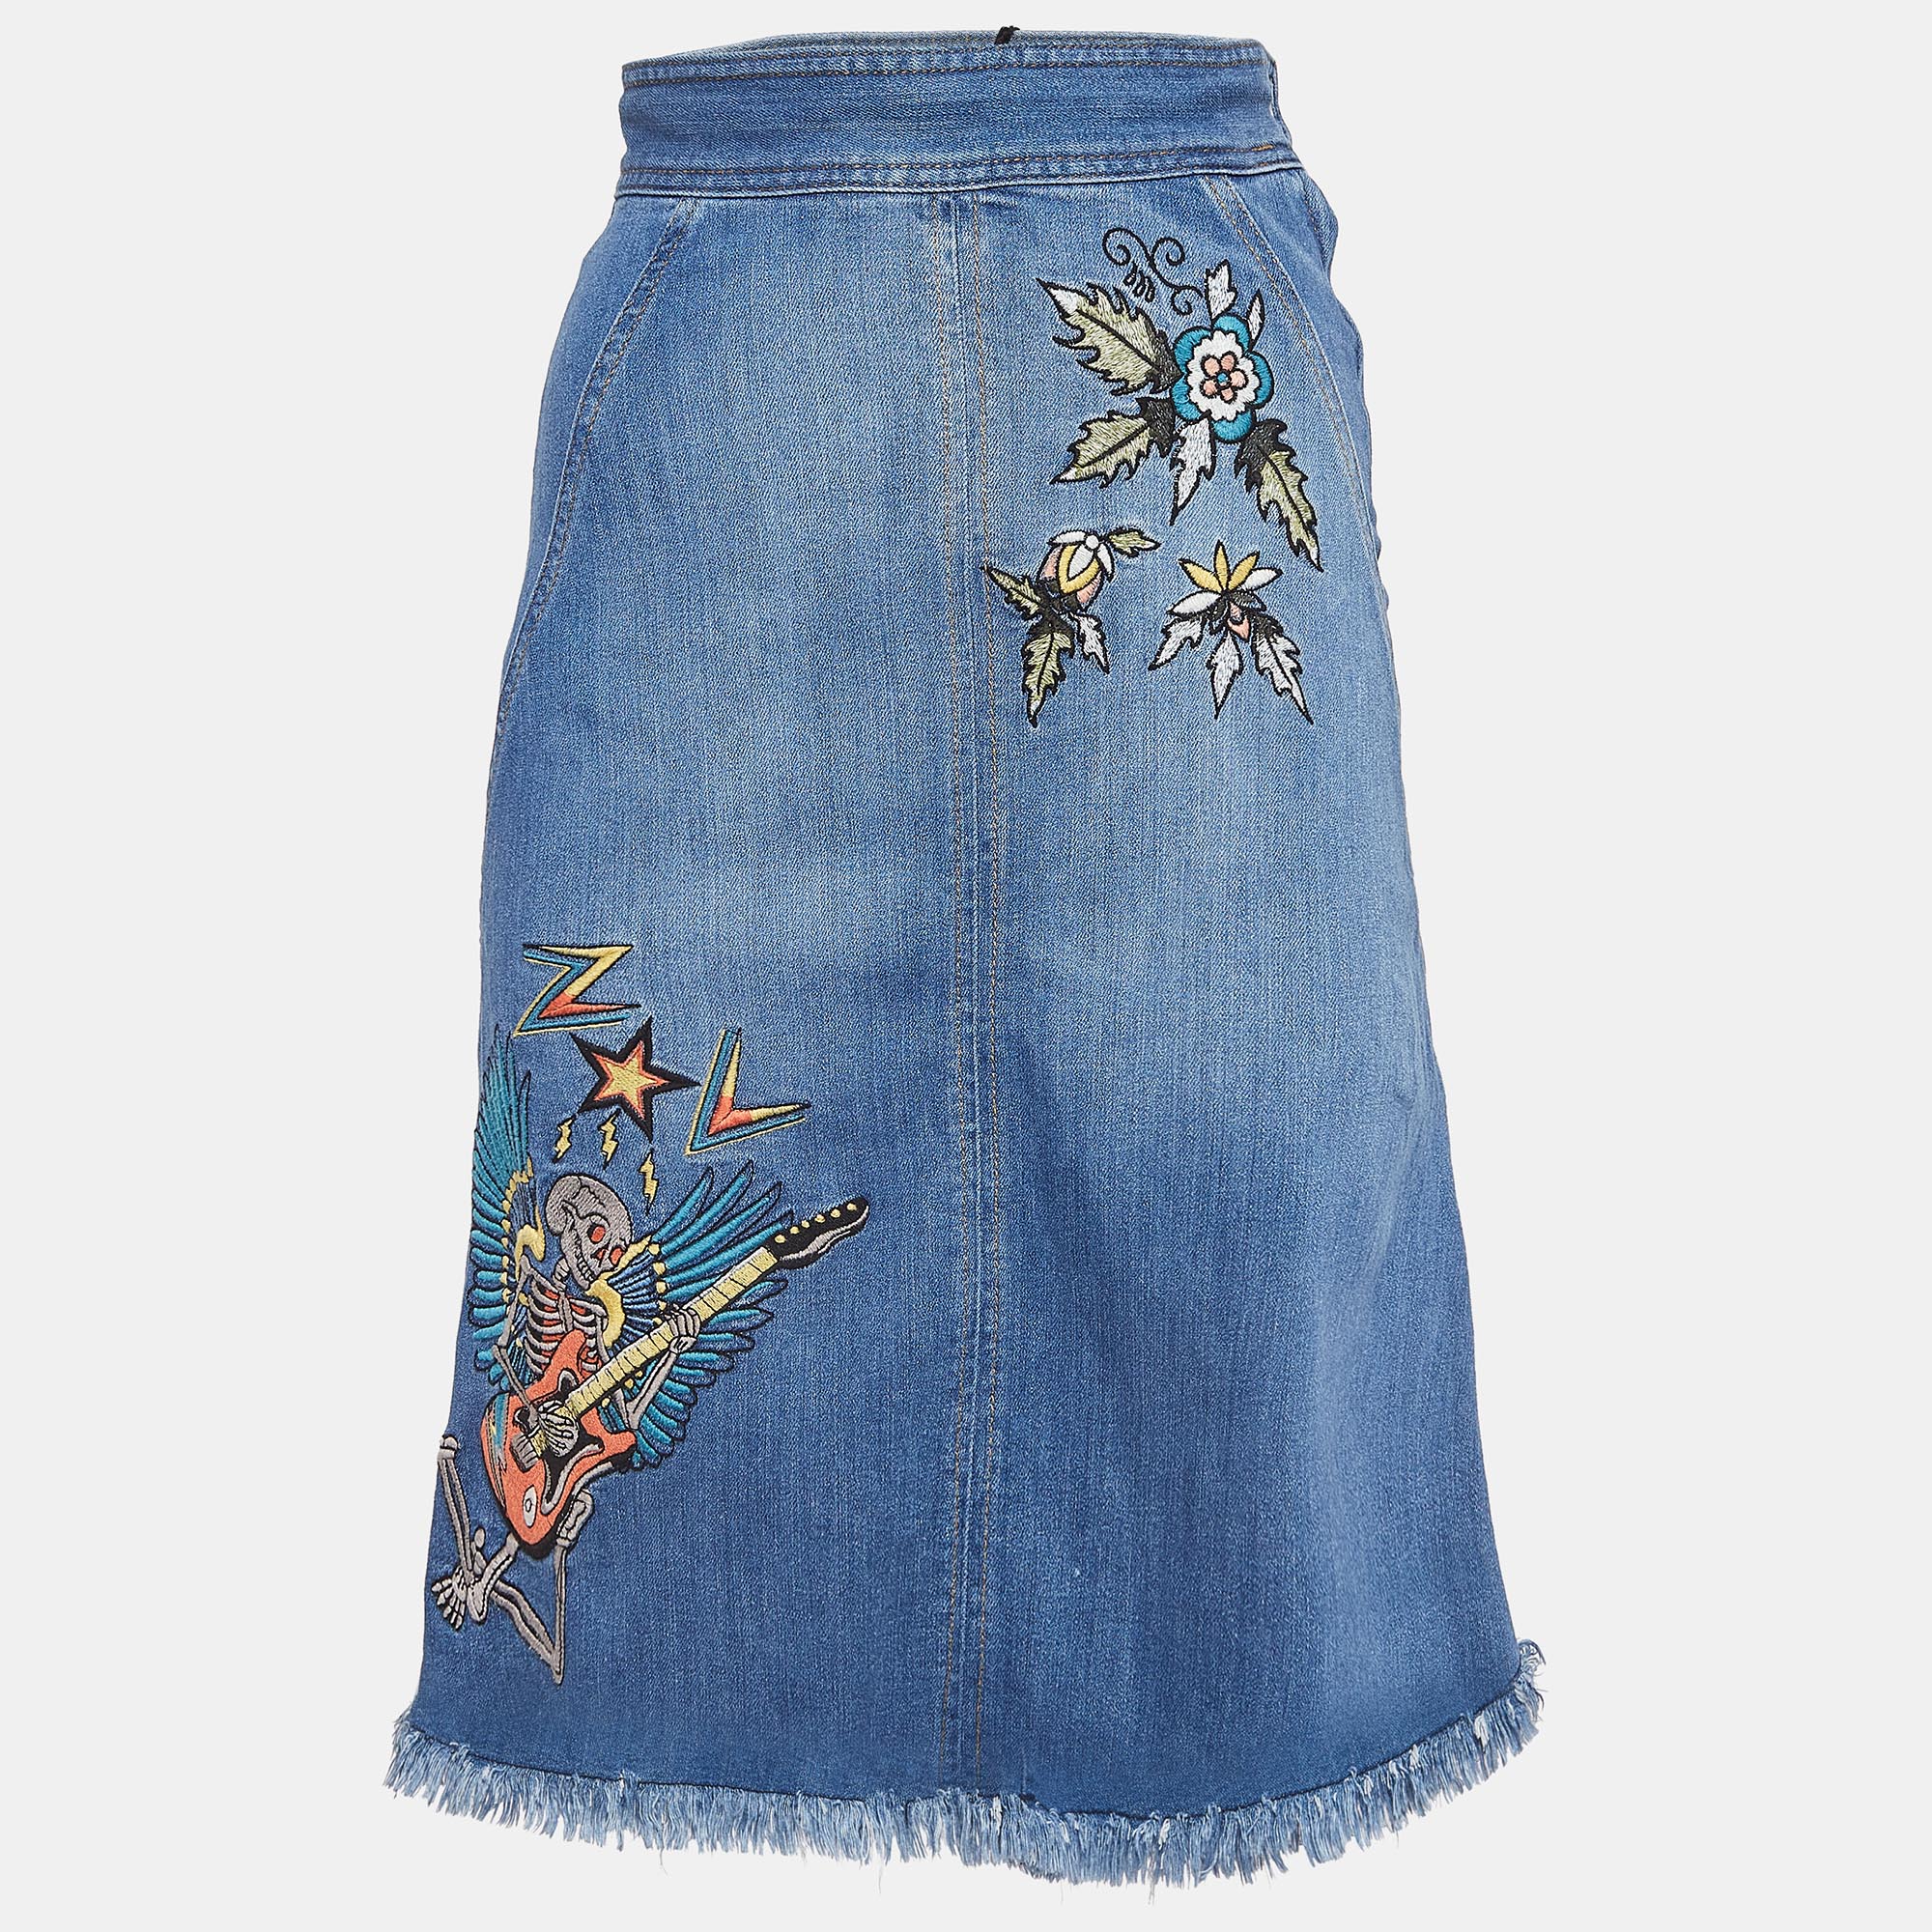 Zadig & voltaire blue embroidered denim knee length skirt s